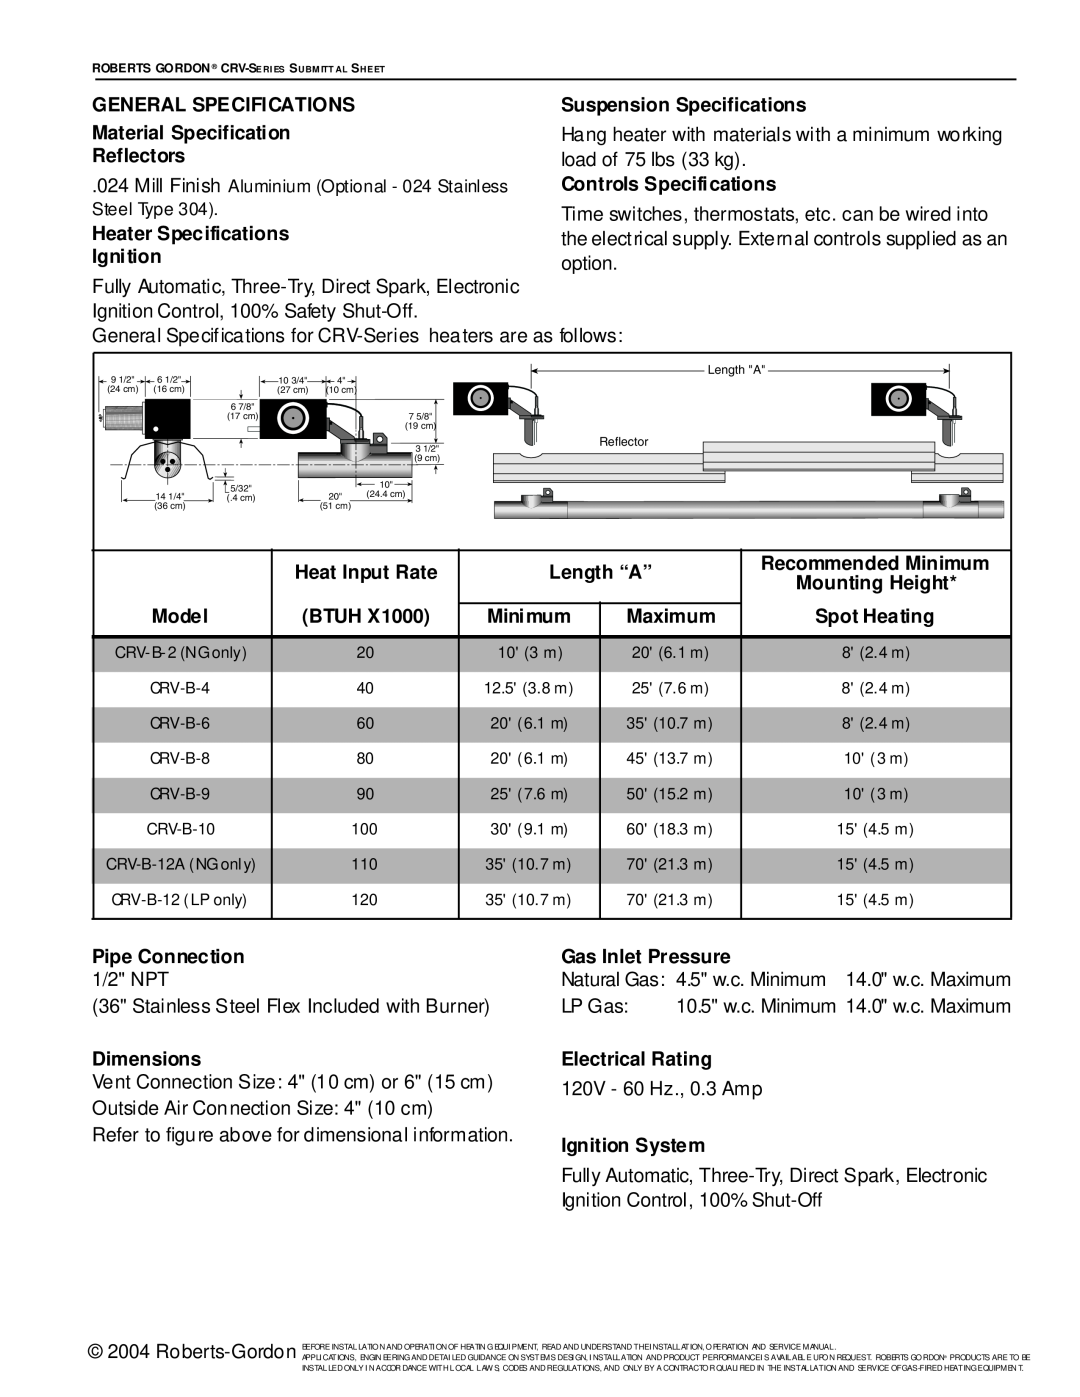 Roberts Gorden CRV-Series service manual General Specifications 